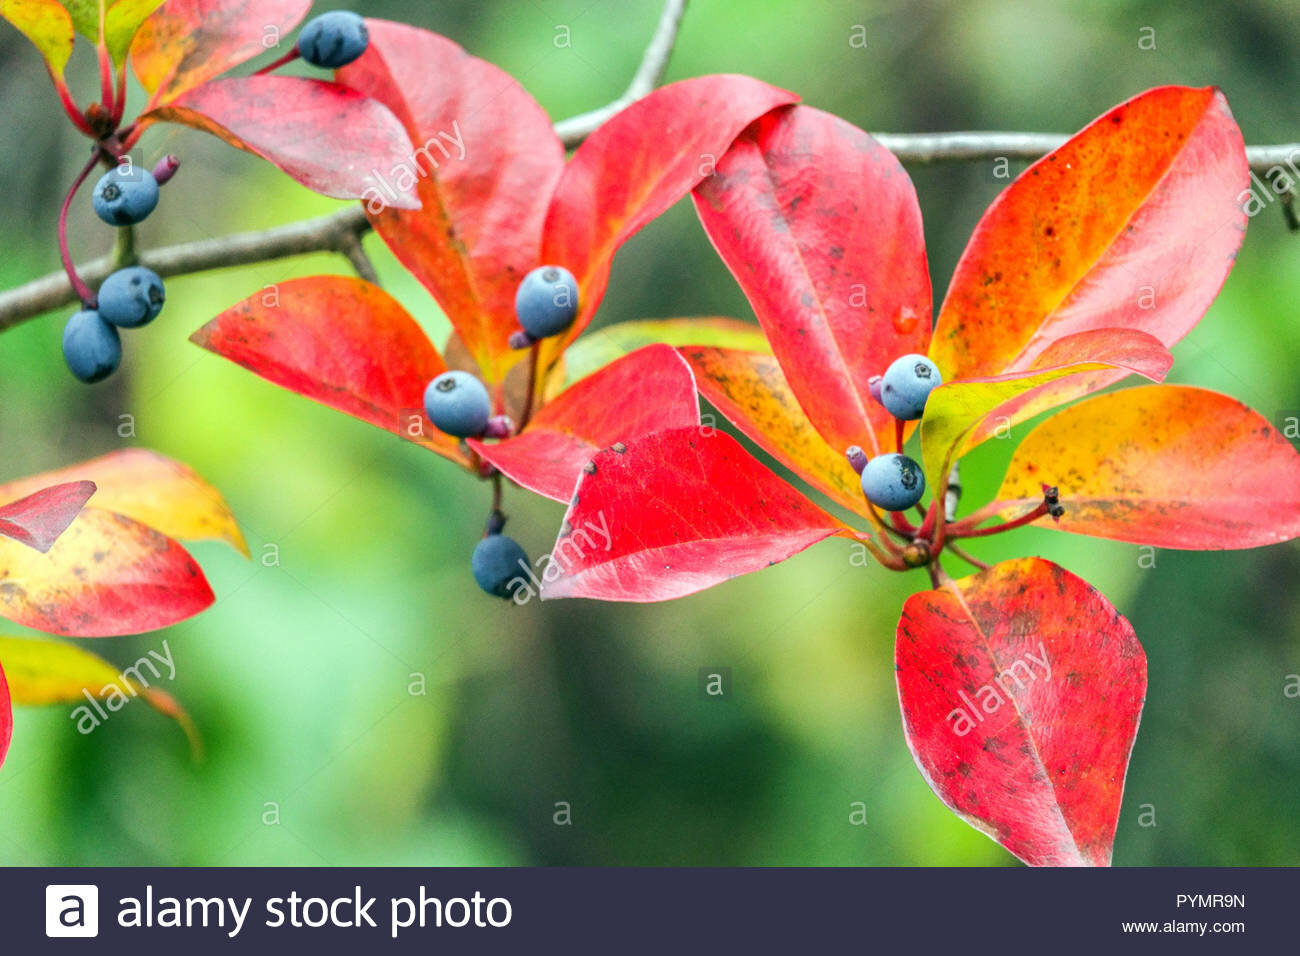 HR Tupelo nyssa-sylvatica-autumn-tupelo-tree-black-gum-red-leaves-and-berries-PYMR9N.jpg